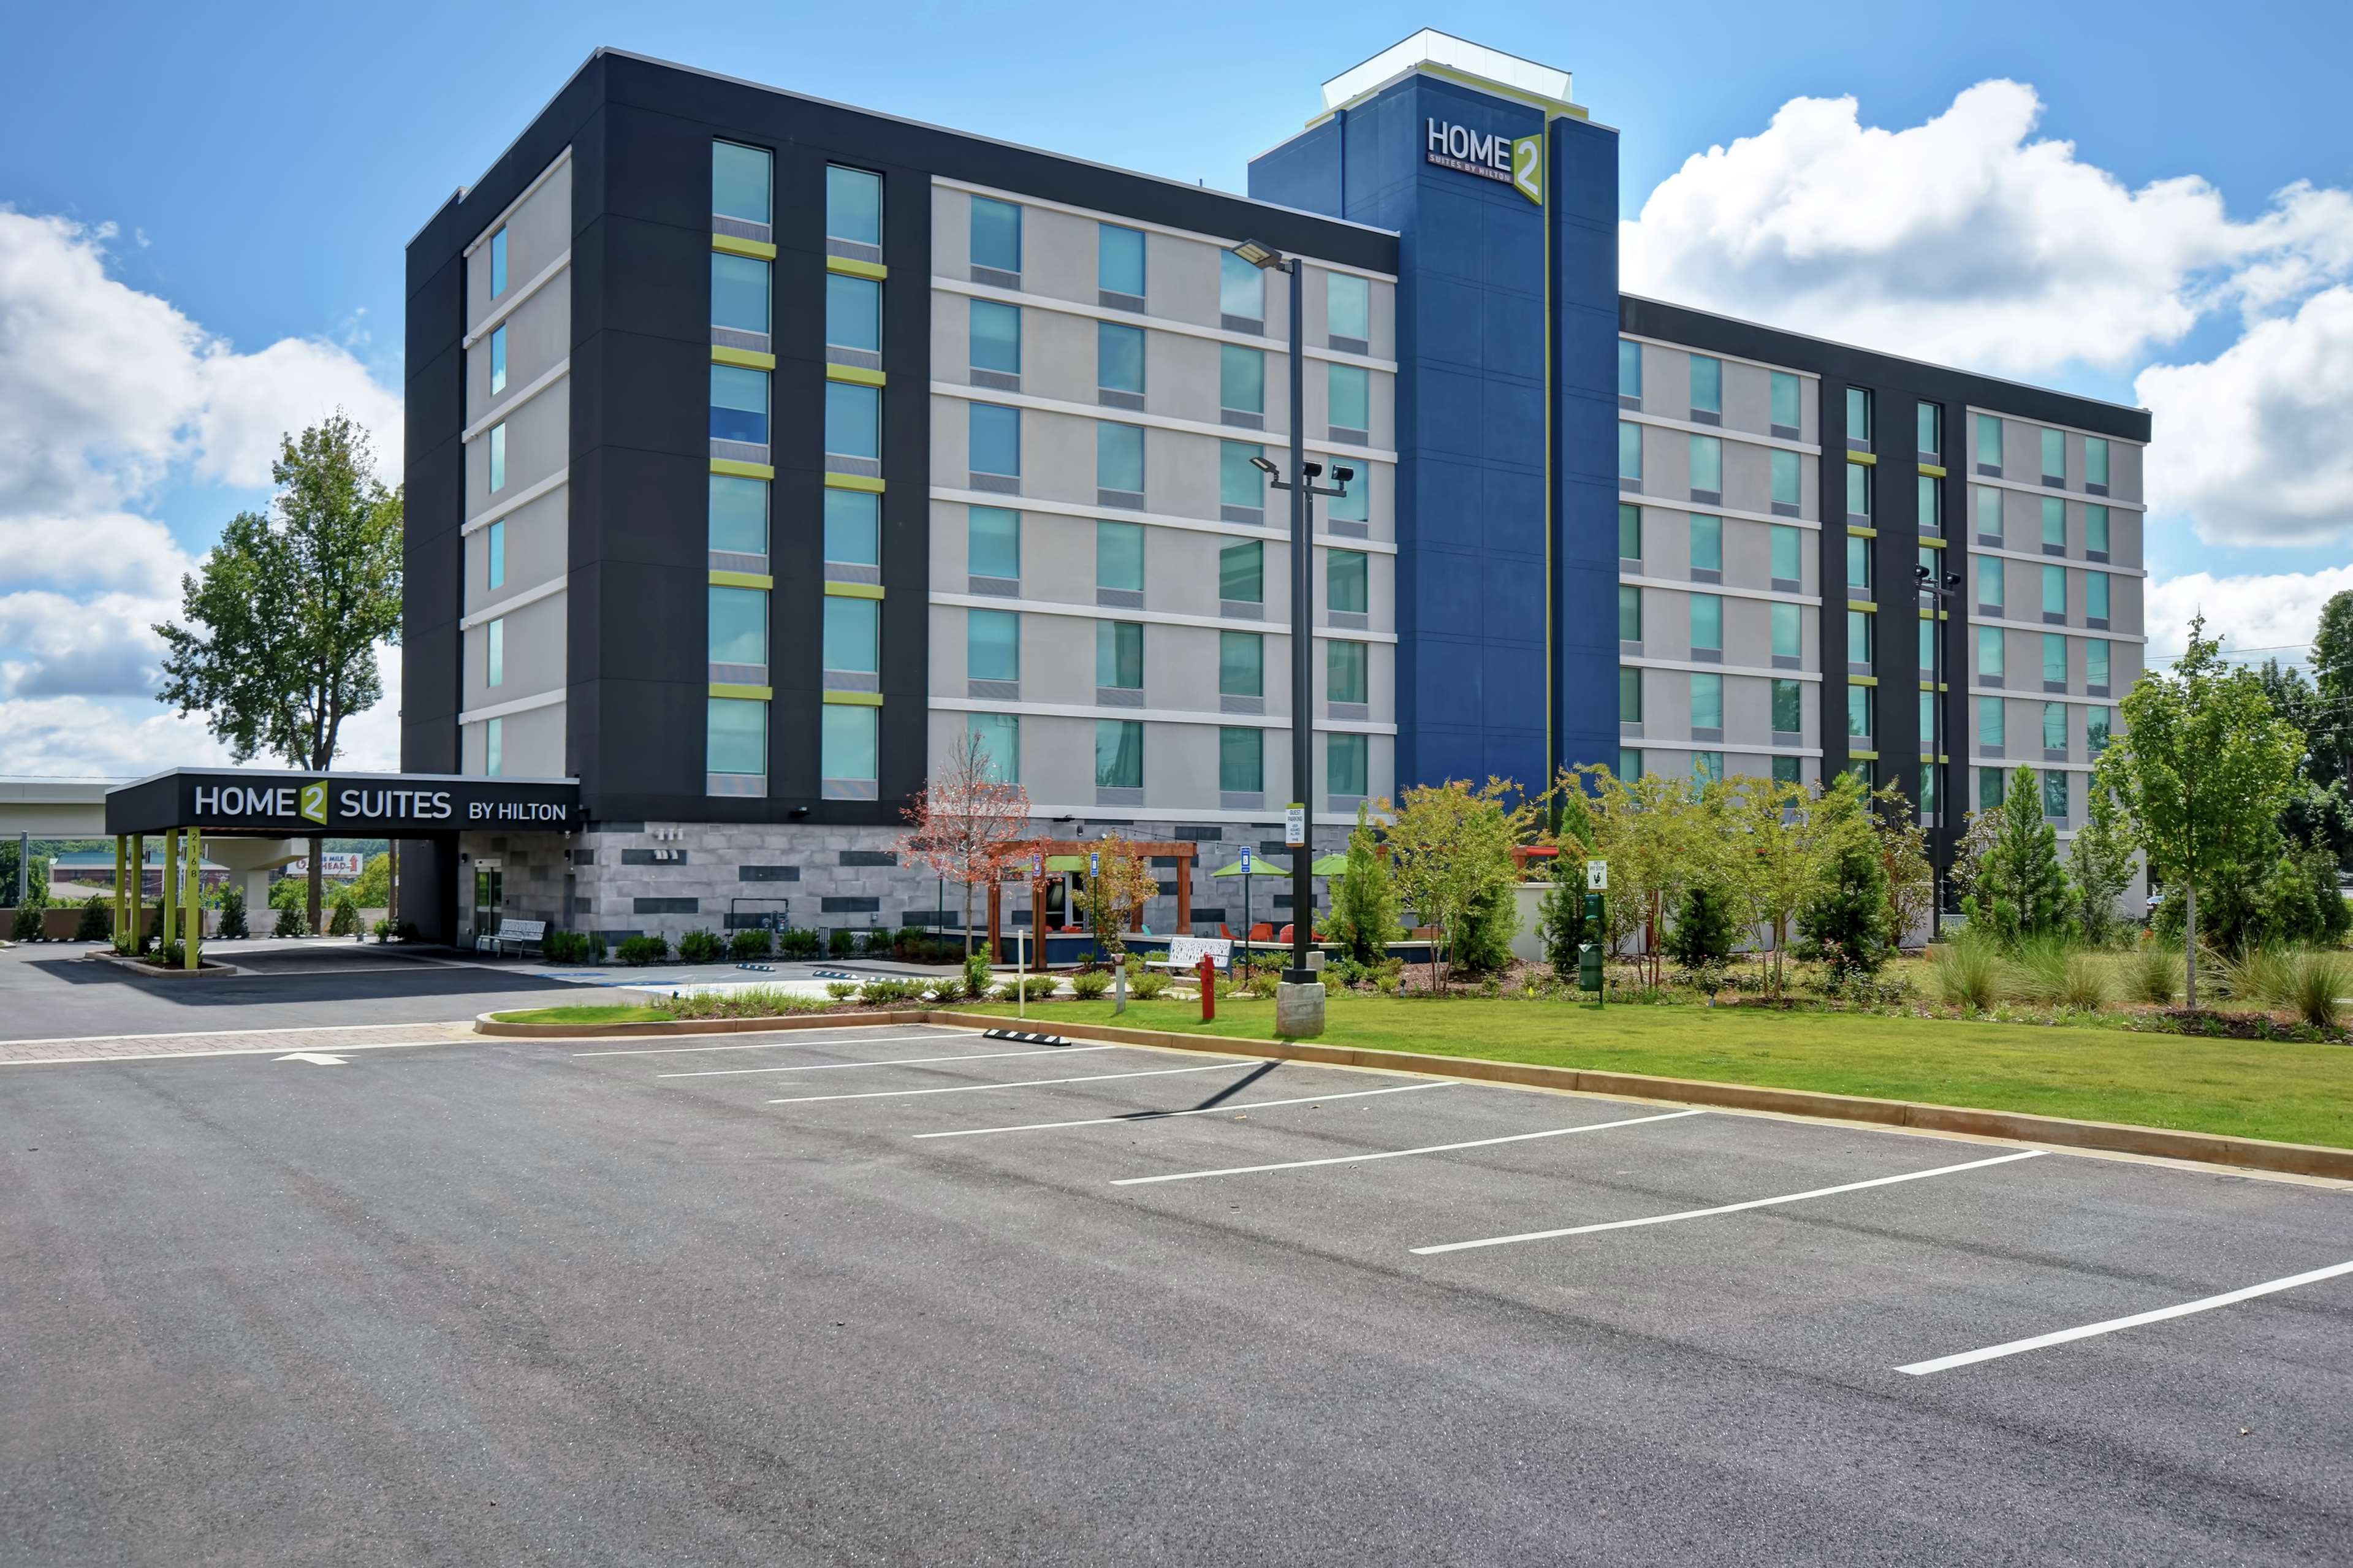 Home2 Suites by Hilton Atlanta Marietta 2168 Kingston Court SE